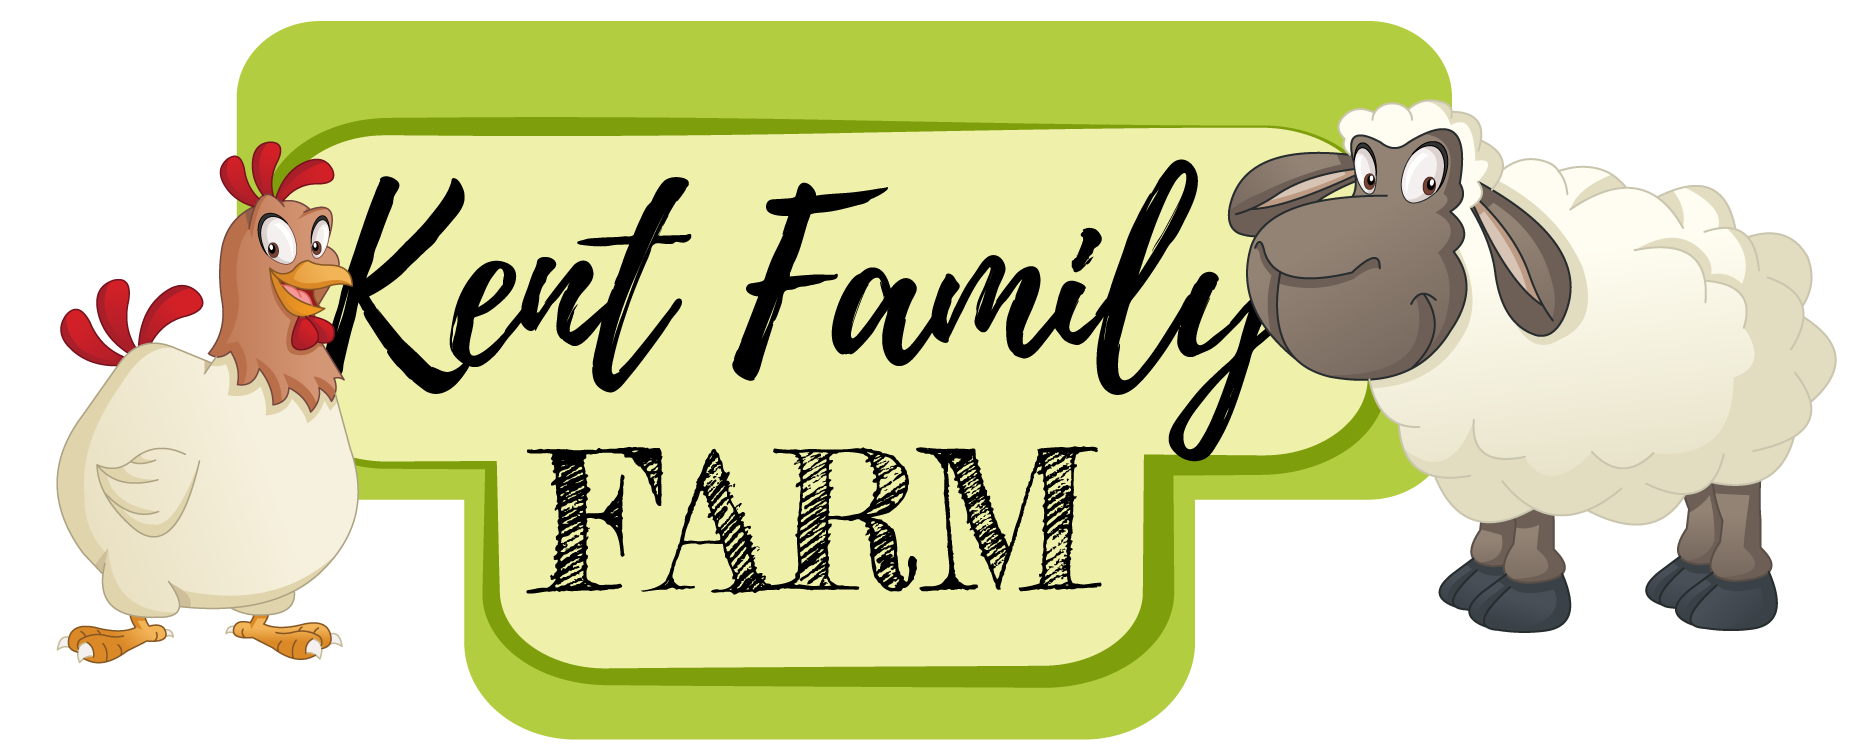 Kent Family Farm